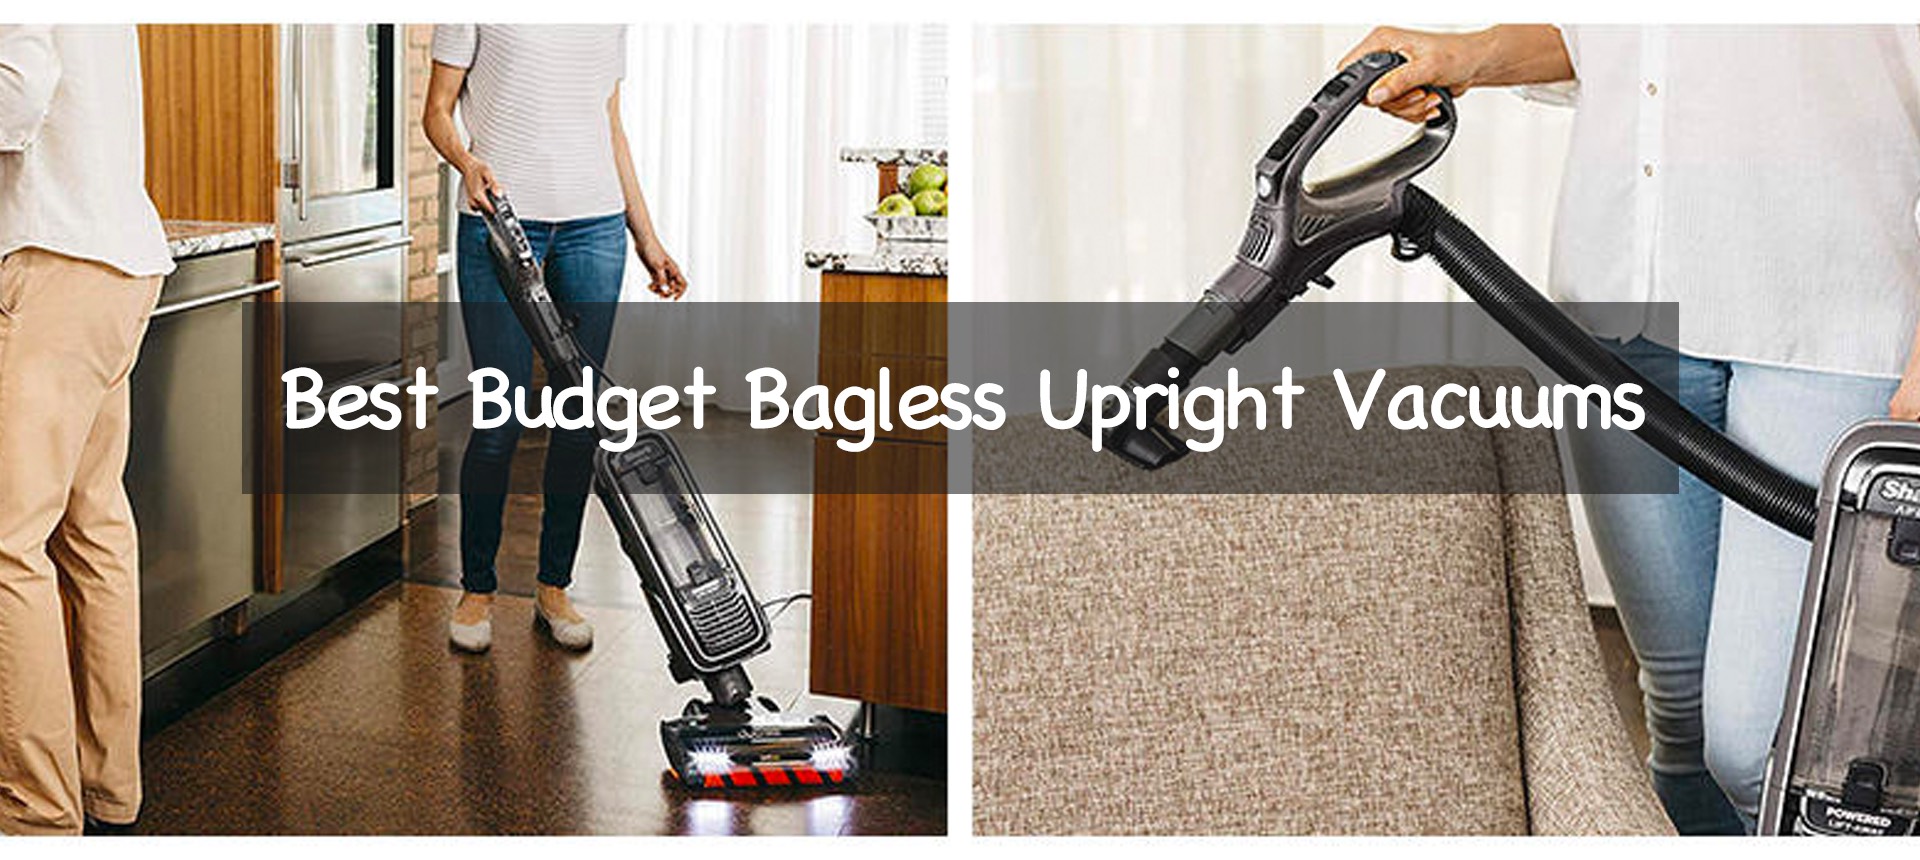 Best Budget Bagless Upright Vacuums